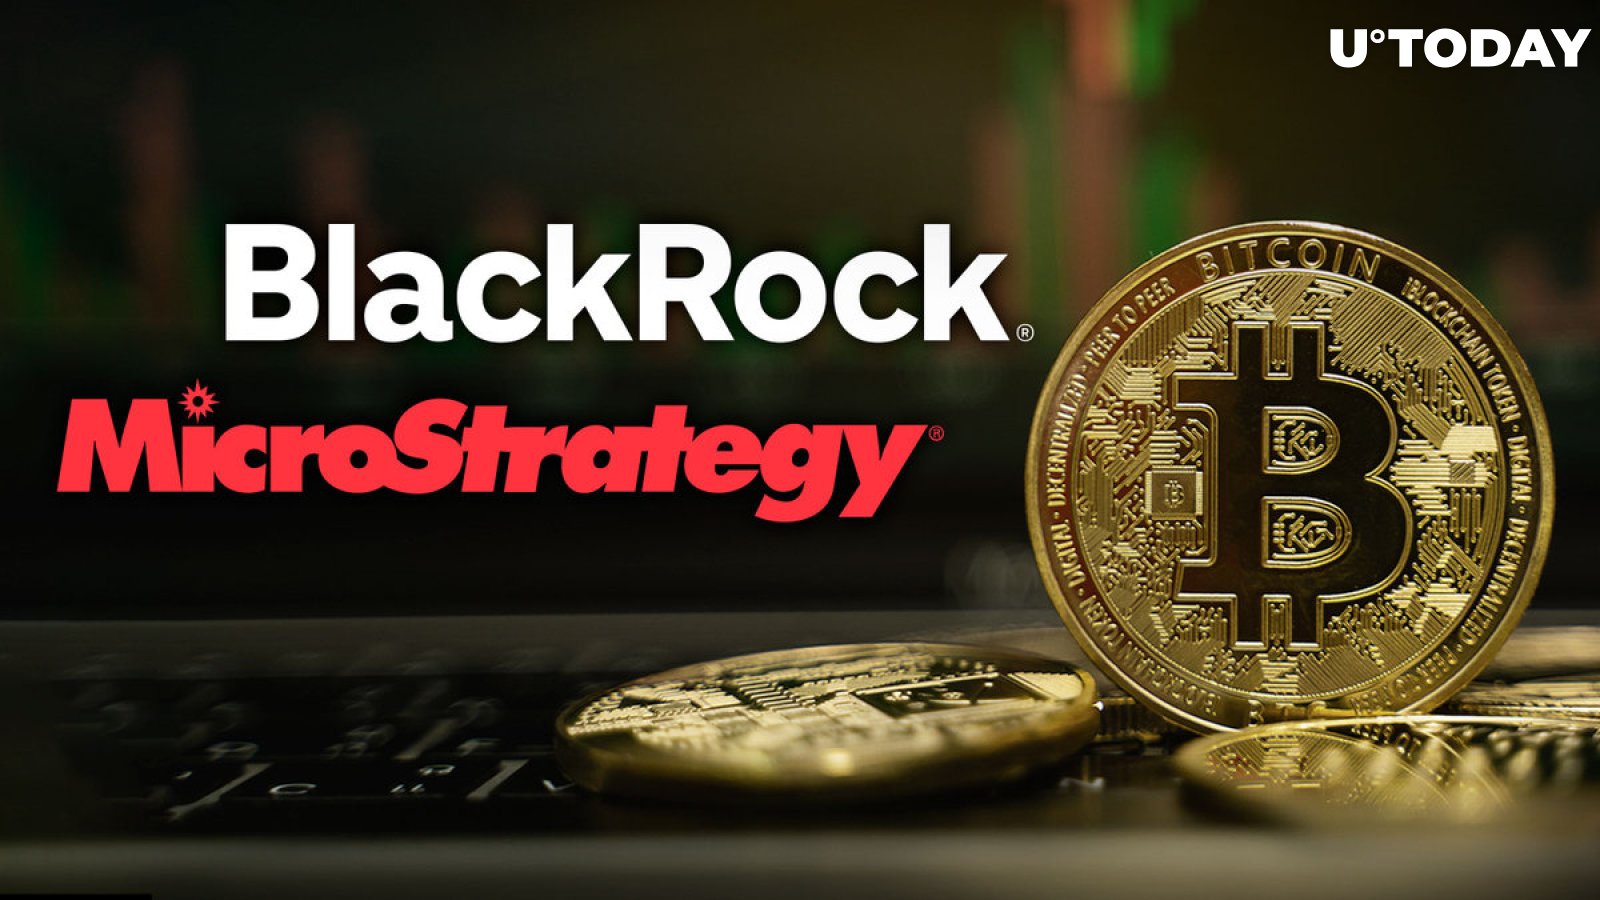 BlackRock surpasses MicroStrategy in Bitcoin numbers